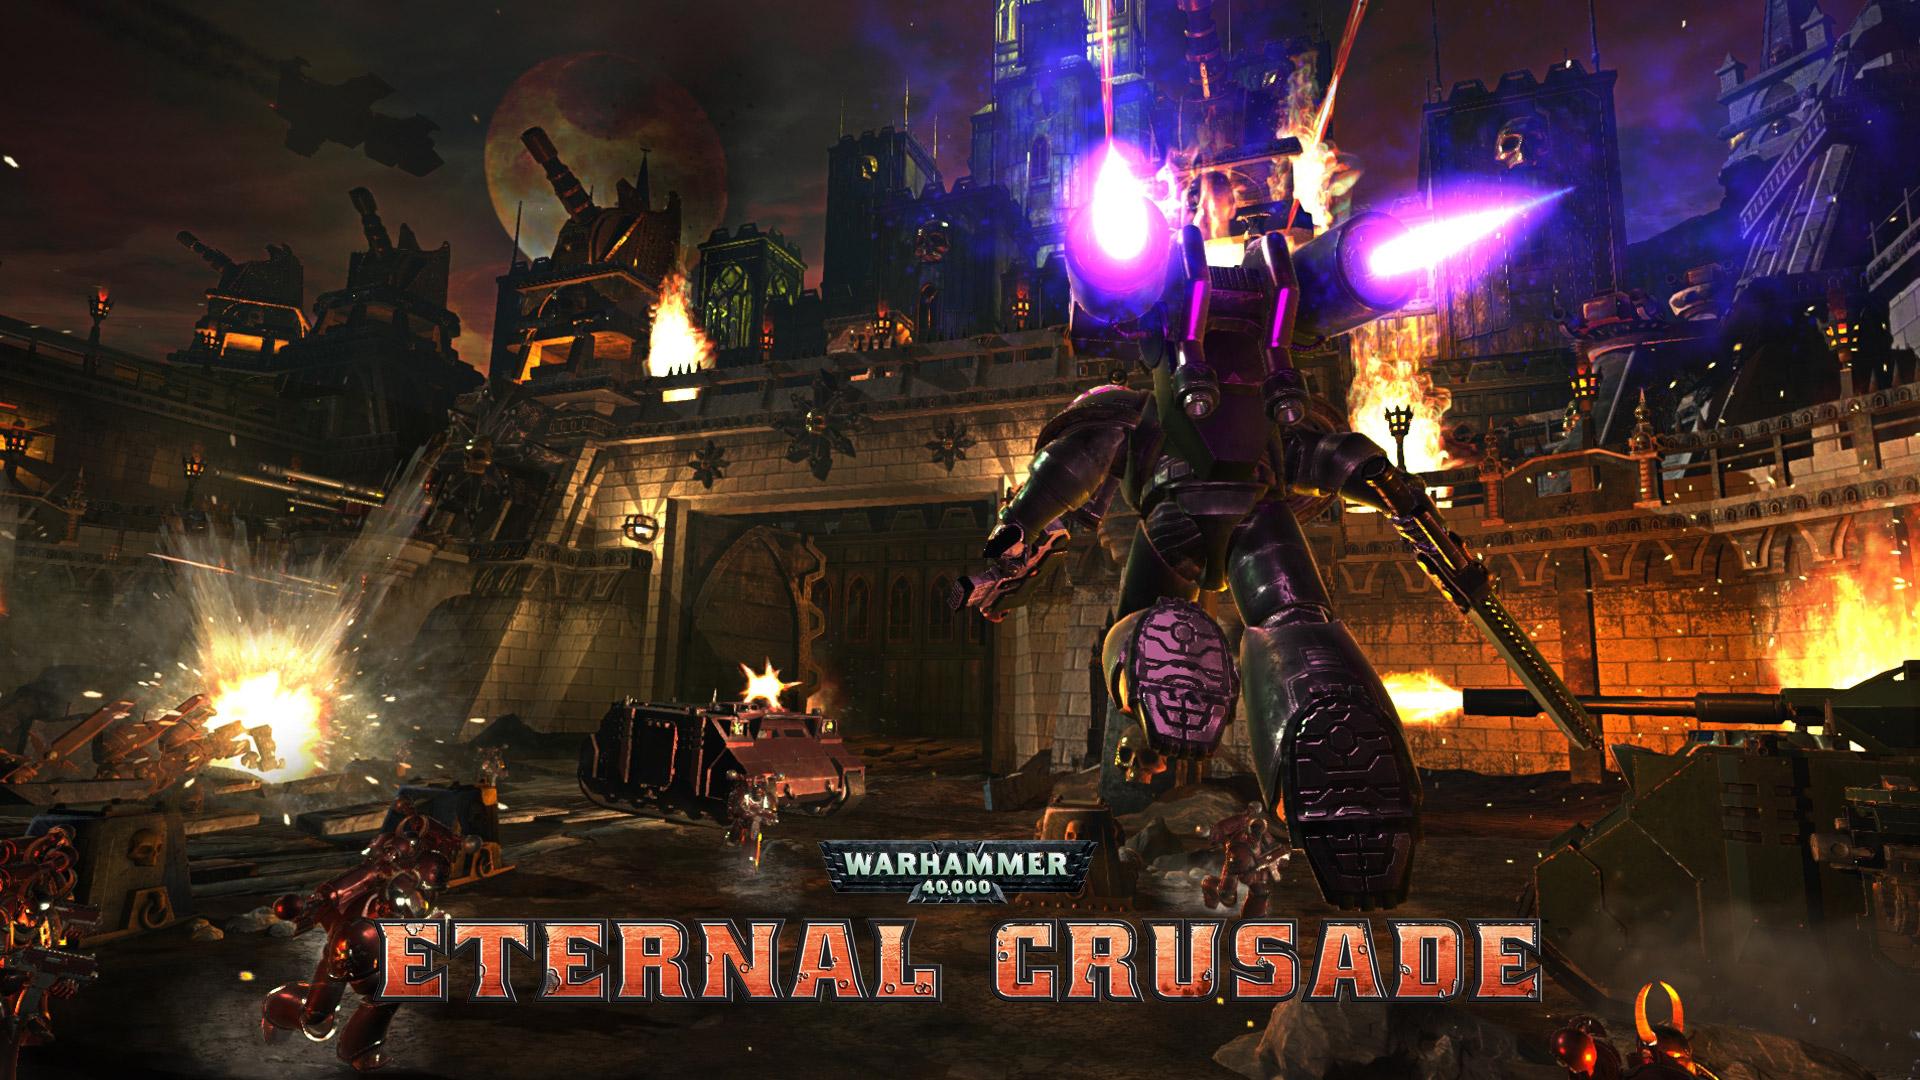 Warhammer 000: Eternal Crusade Wallpaper in 1920x1080